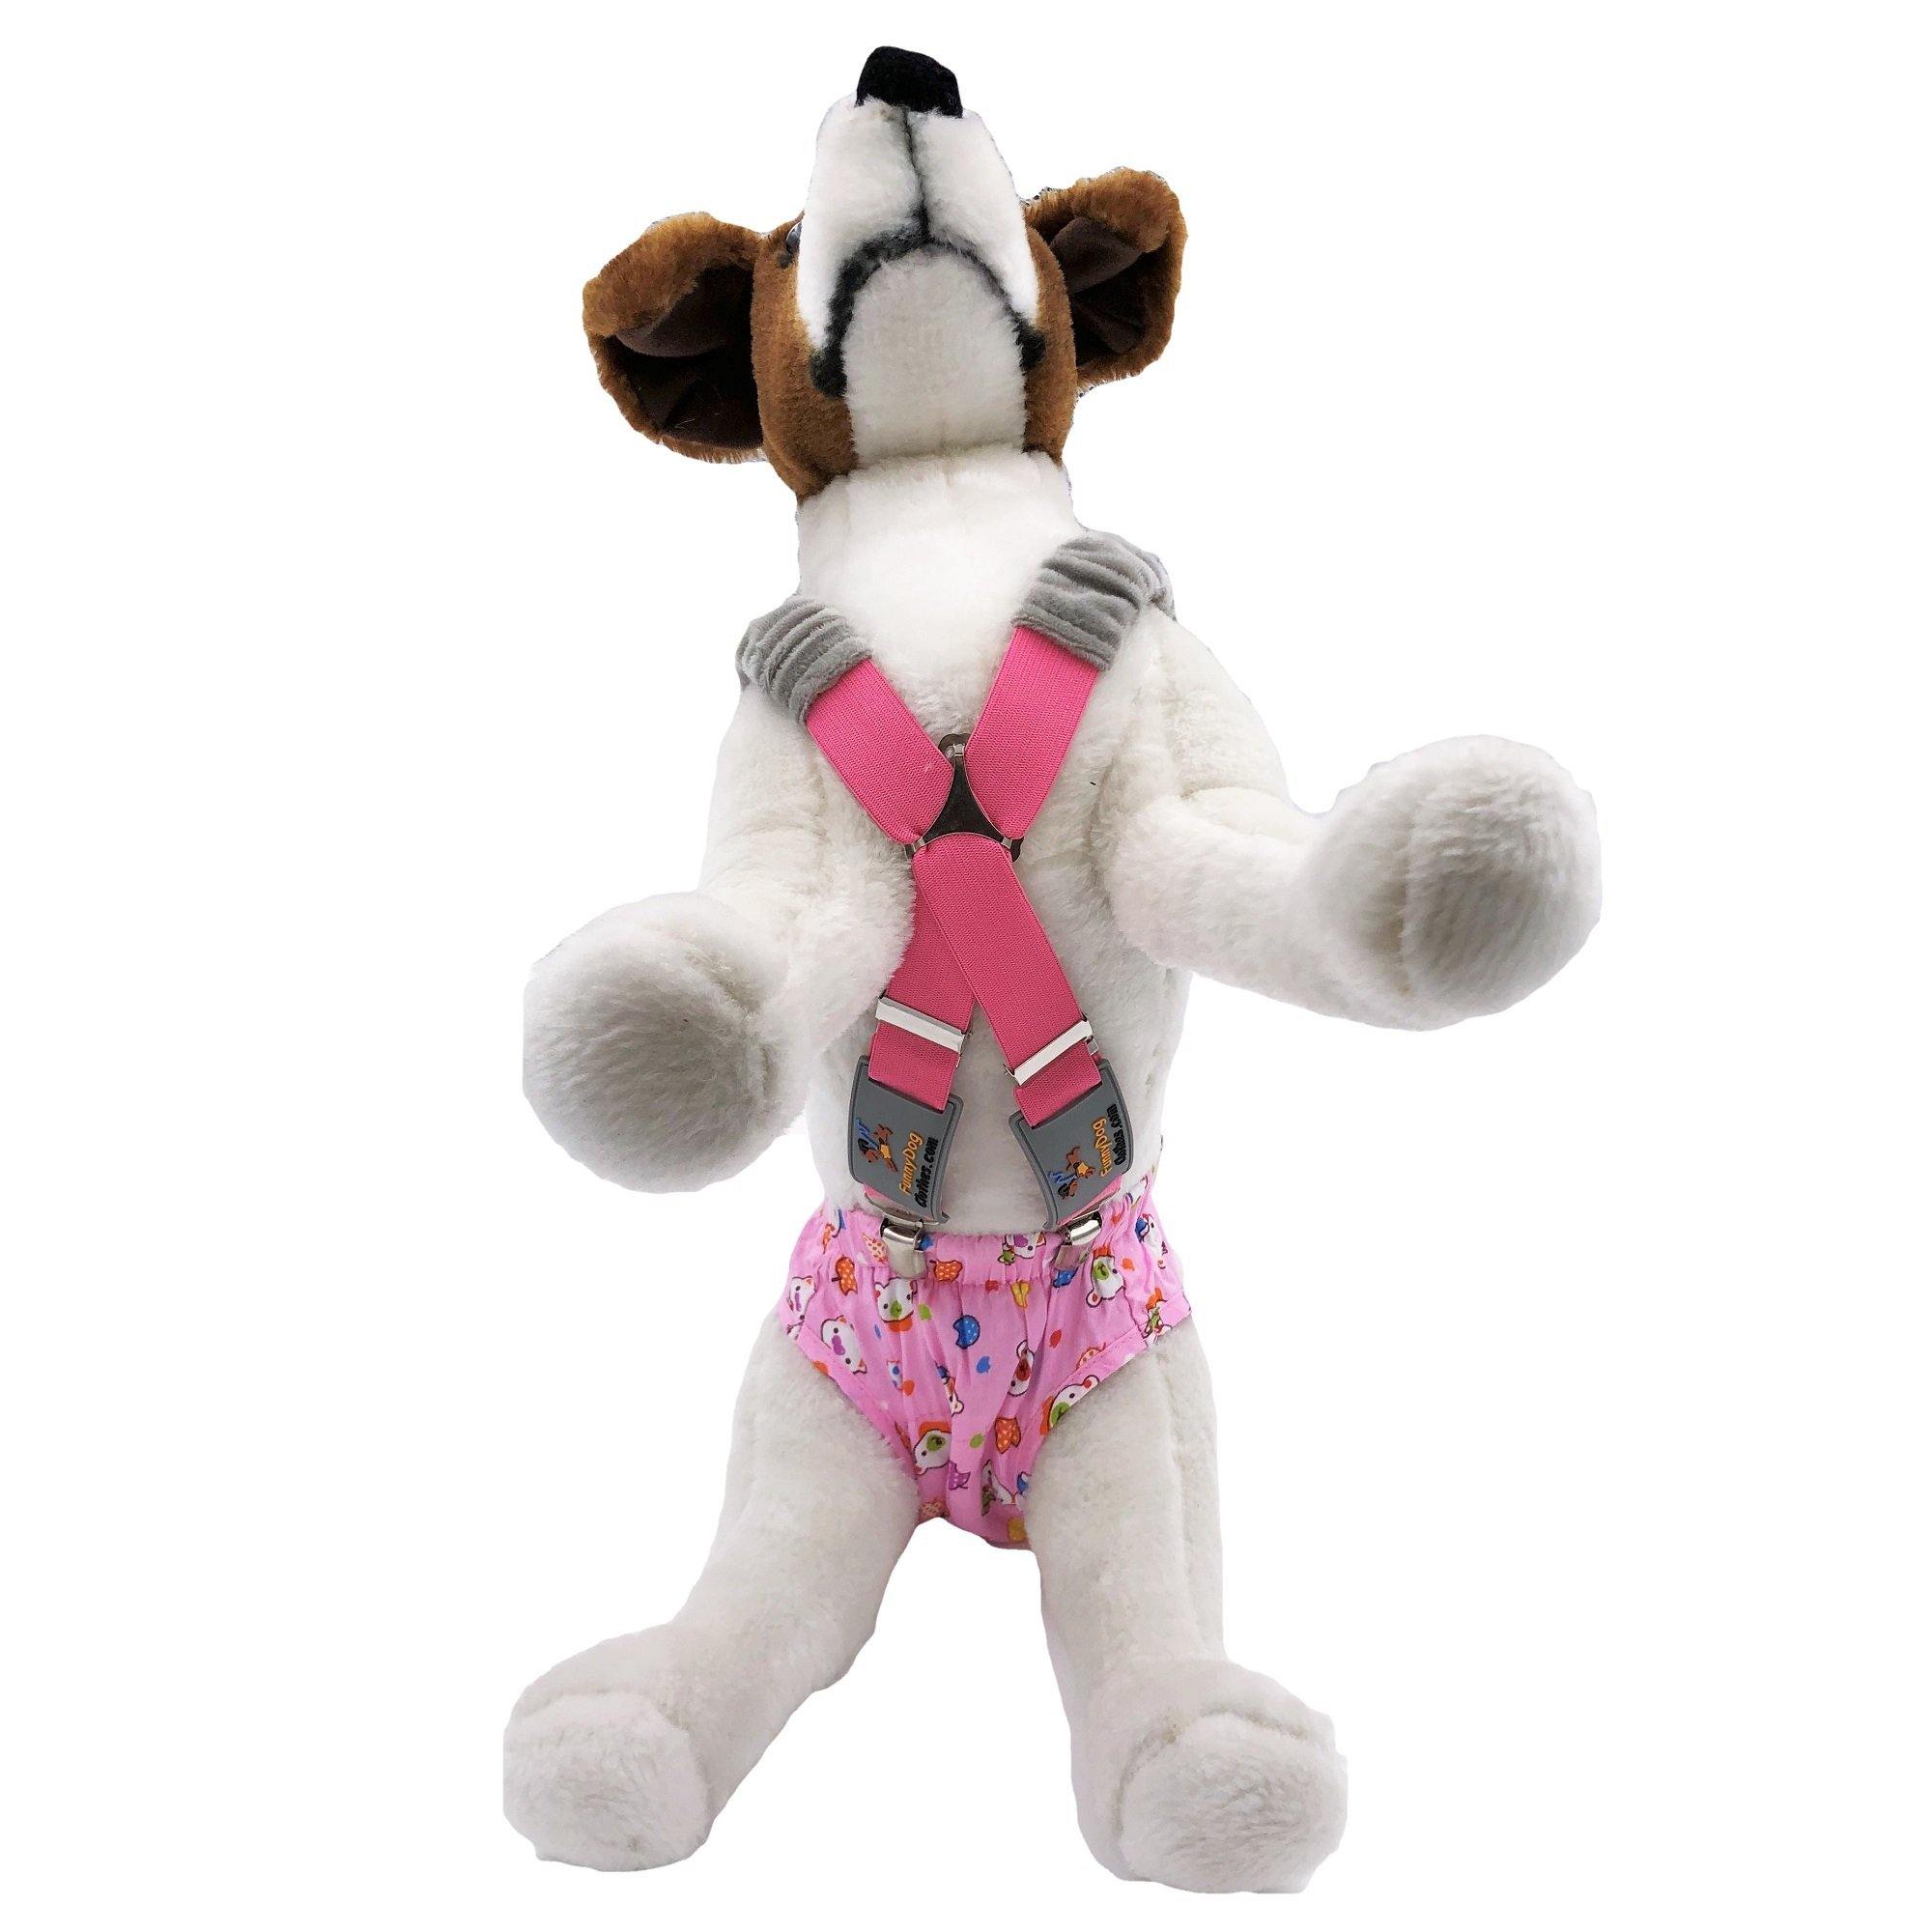 Dog Suspenders